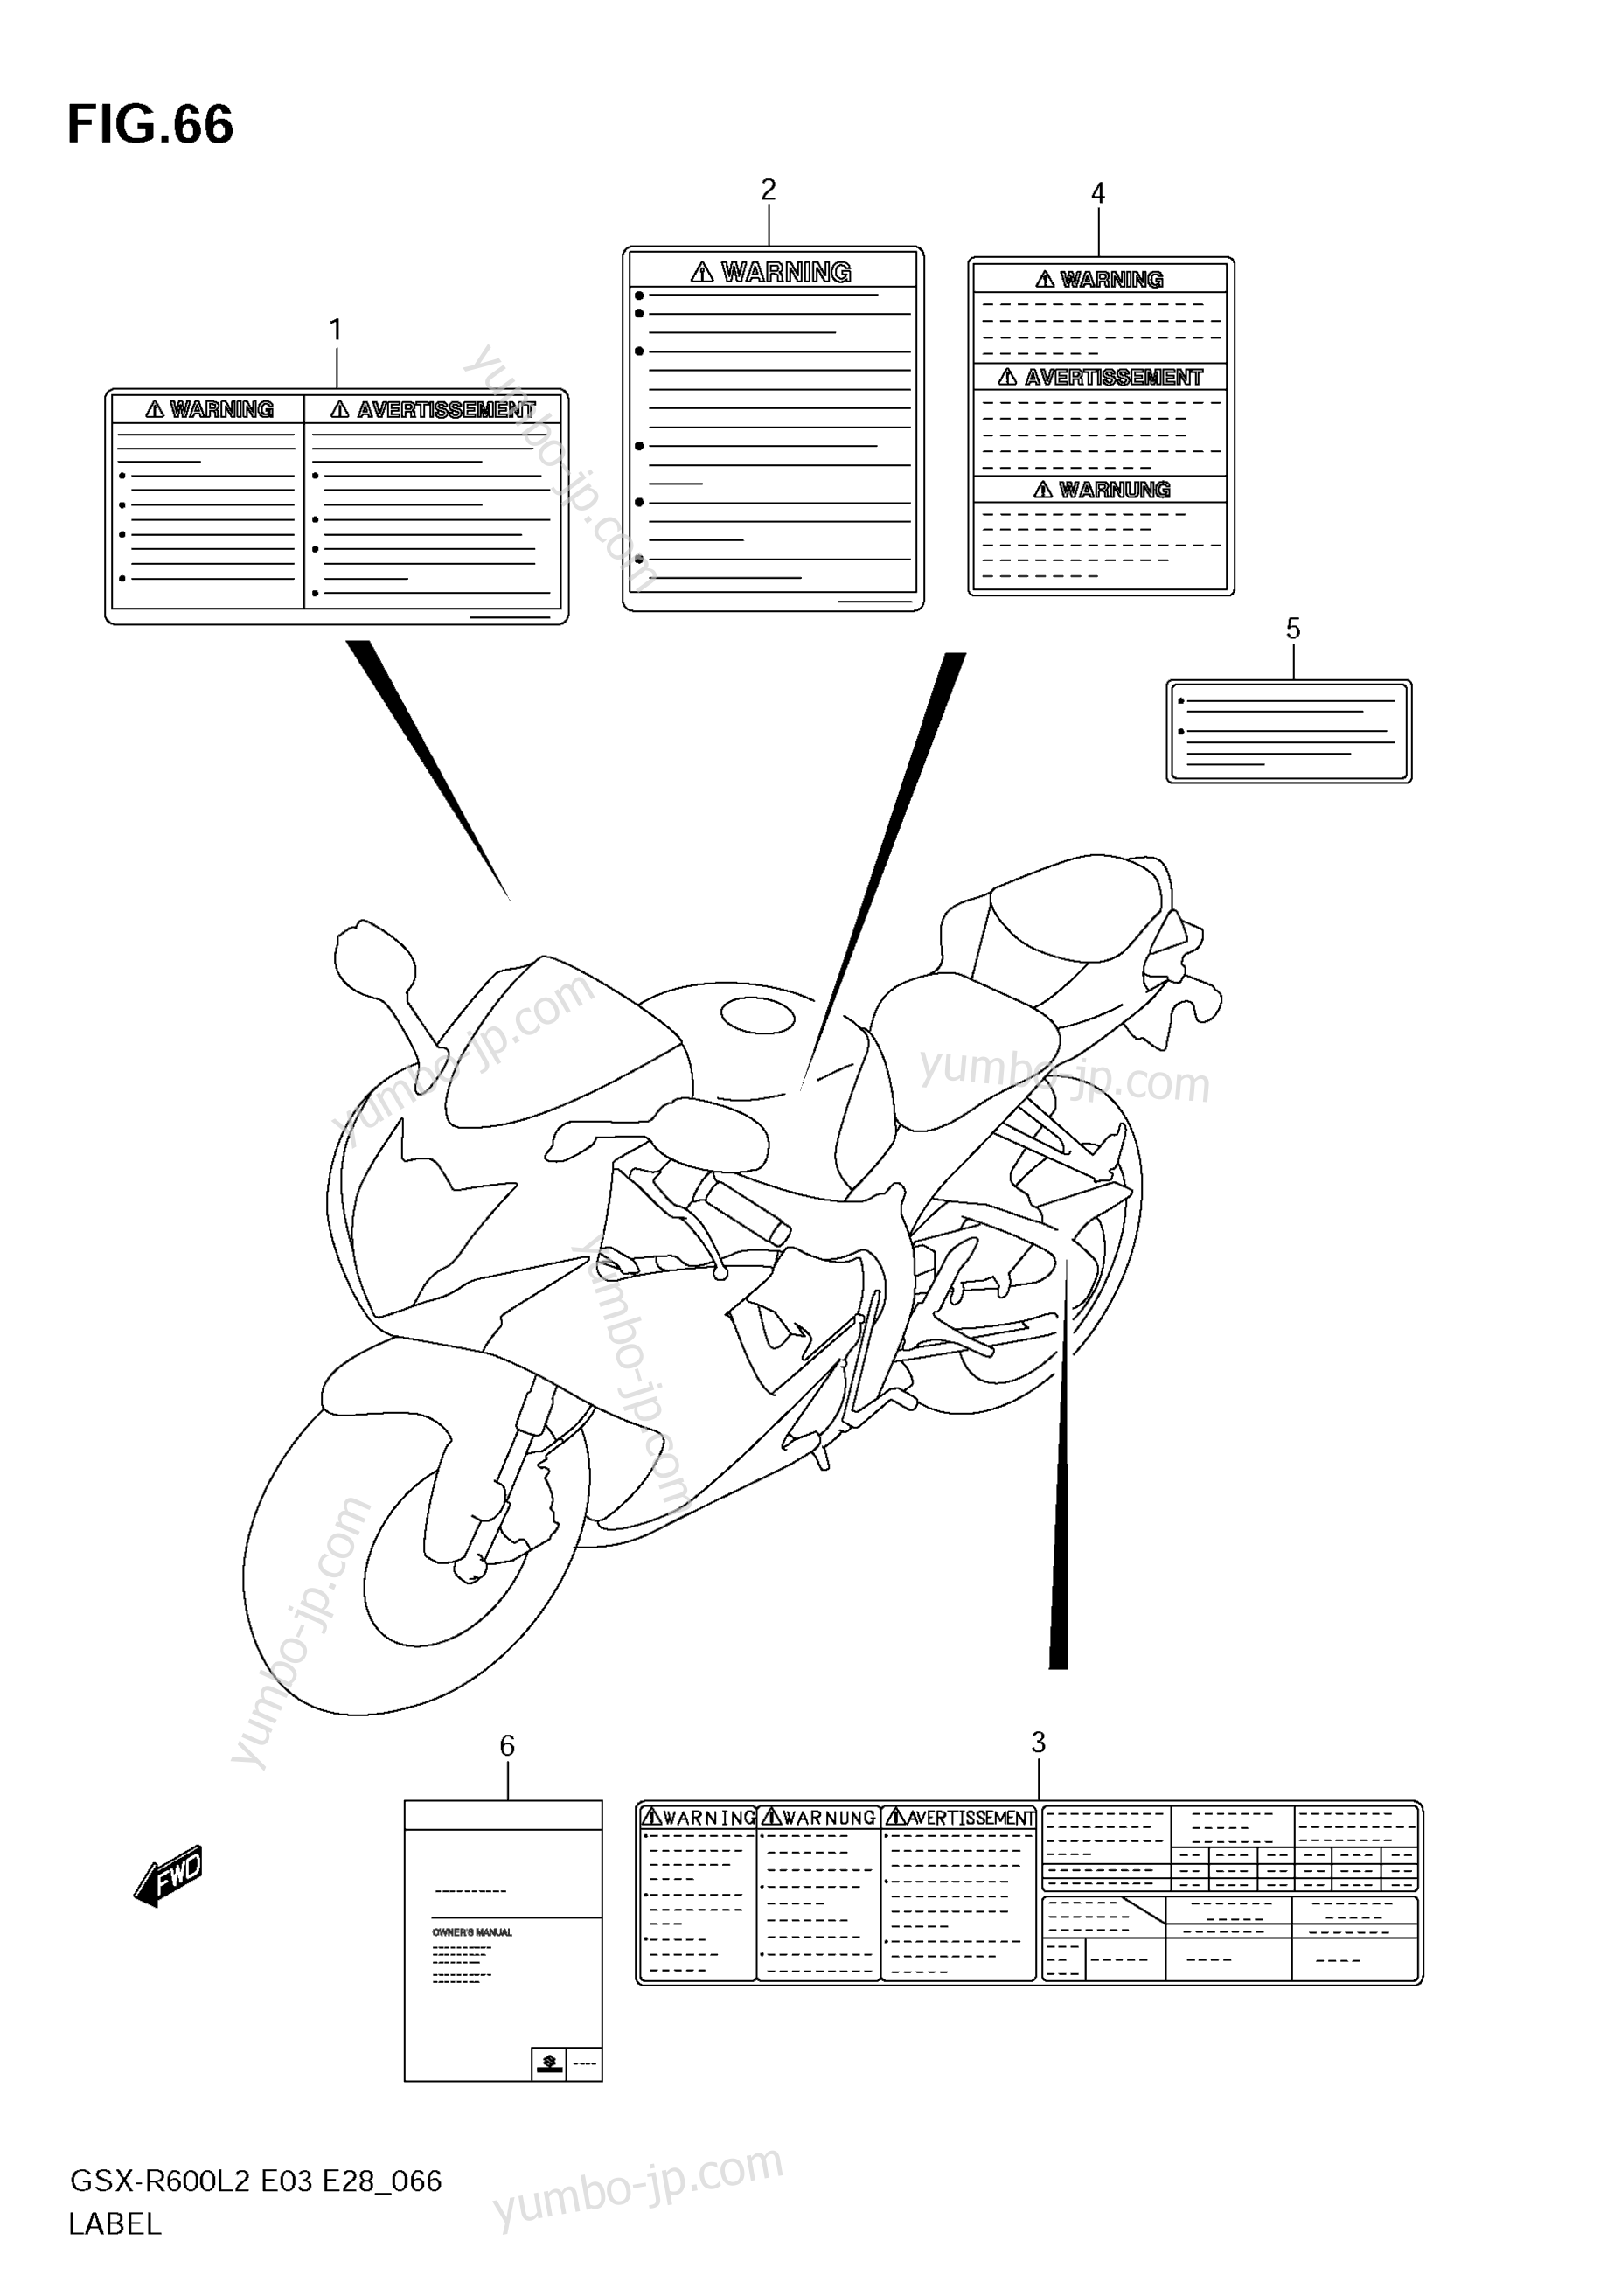 LABEL (GSX-R600L2 E28) for motorcycles SUZUKI GSX-R600 2012 year